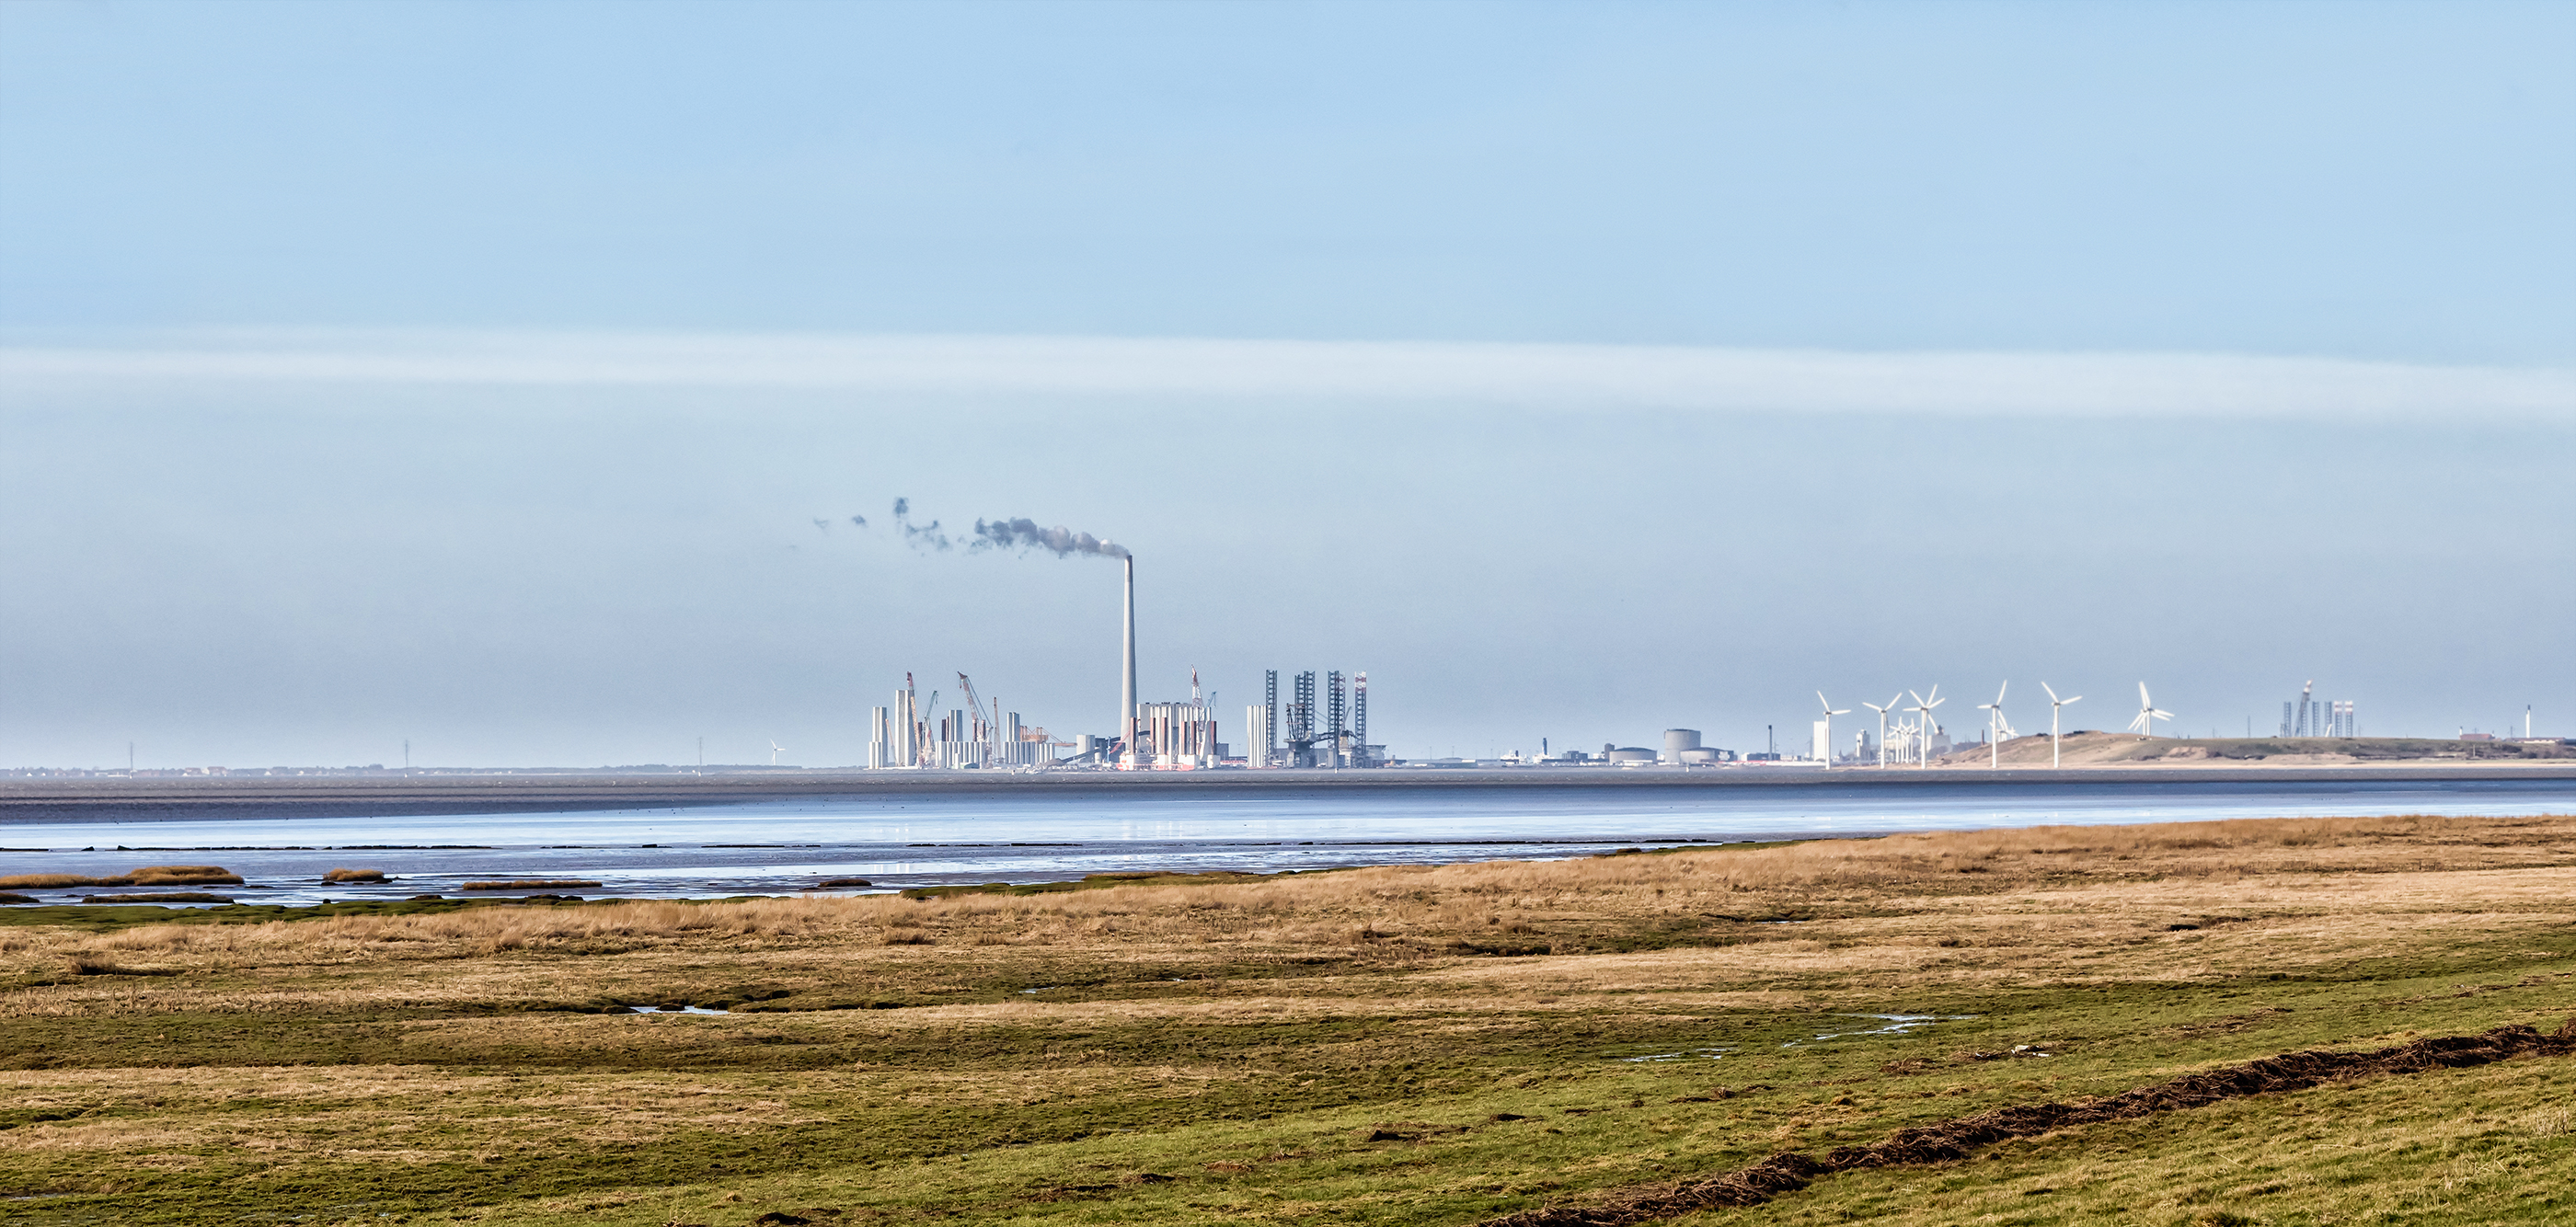 Esbjerg, Danimarca, è una località importante per l’industria eolica europea.